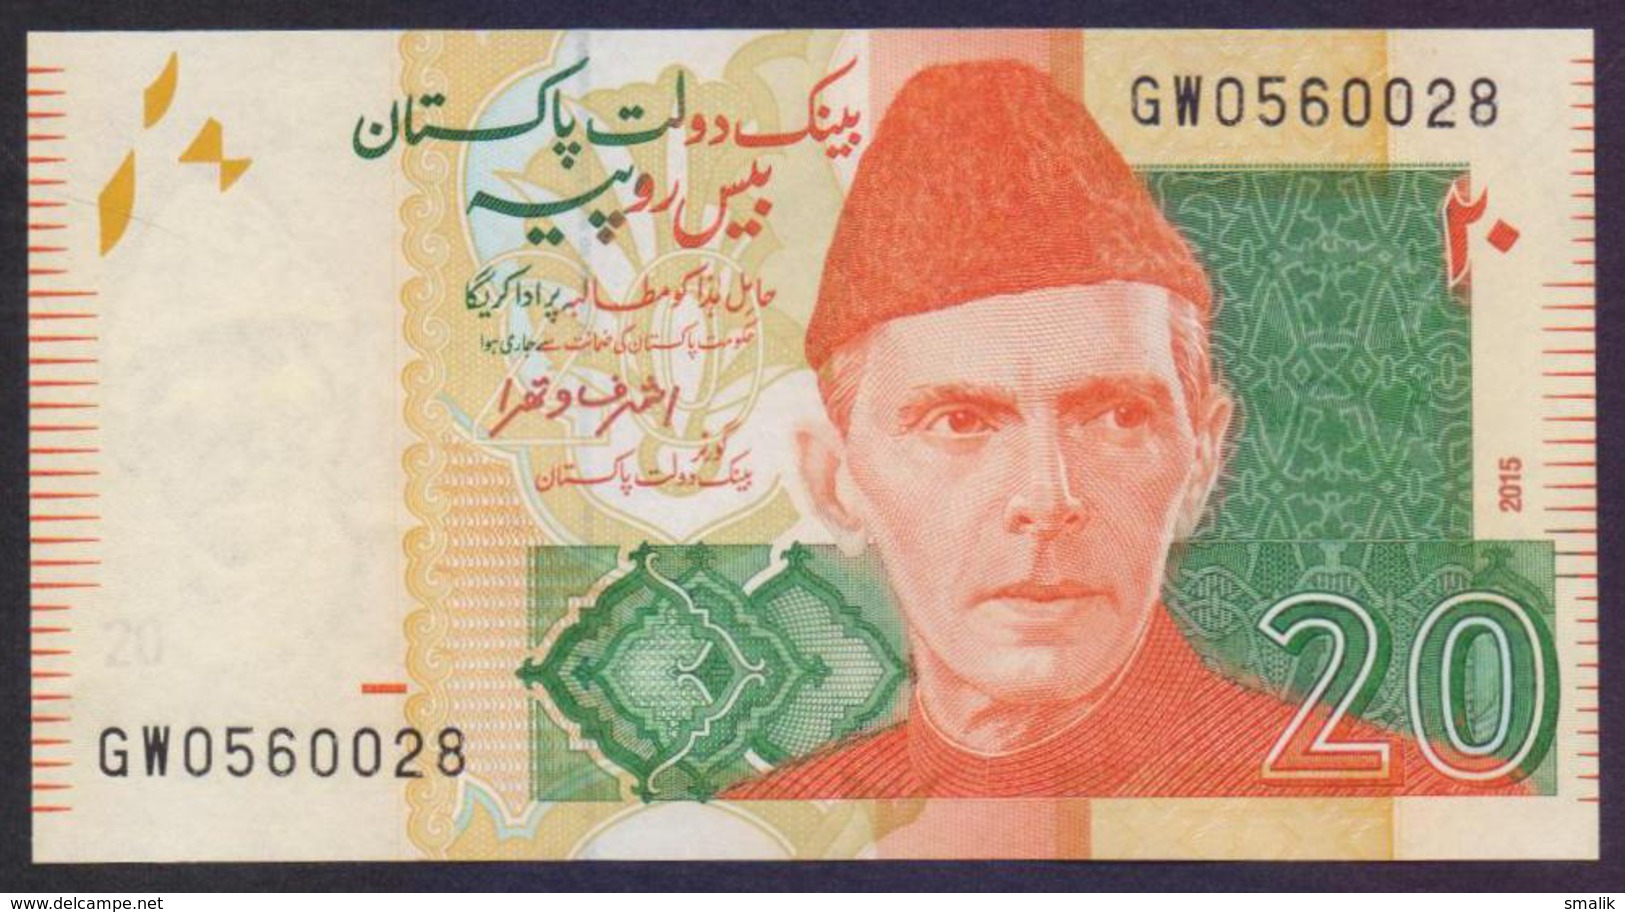 PAKISTAN BANKNOTE 2015 - Rs.20 Rupees New Note, Signature: Ashraf Vathra, Prefix "GW" 0560028 UNC - Pakistan